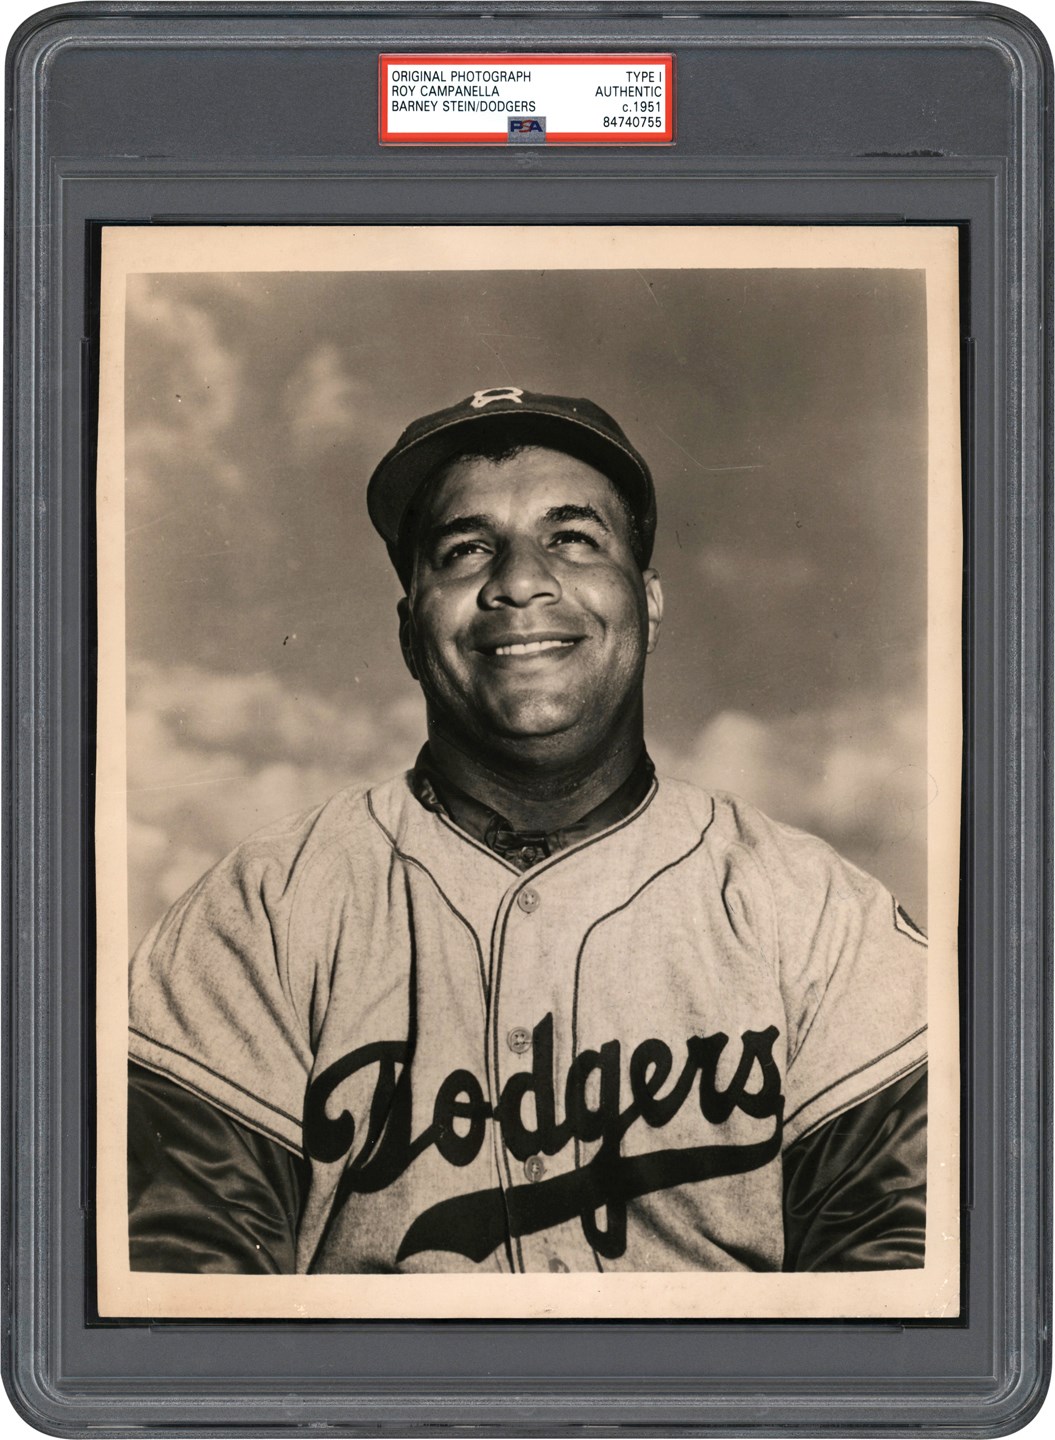 - 1951 Roy Campanella Brooklyn Dodgers Photograph (PSA Type I)